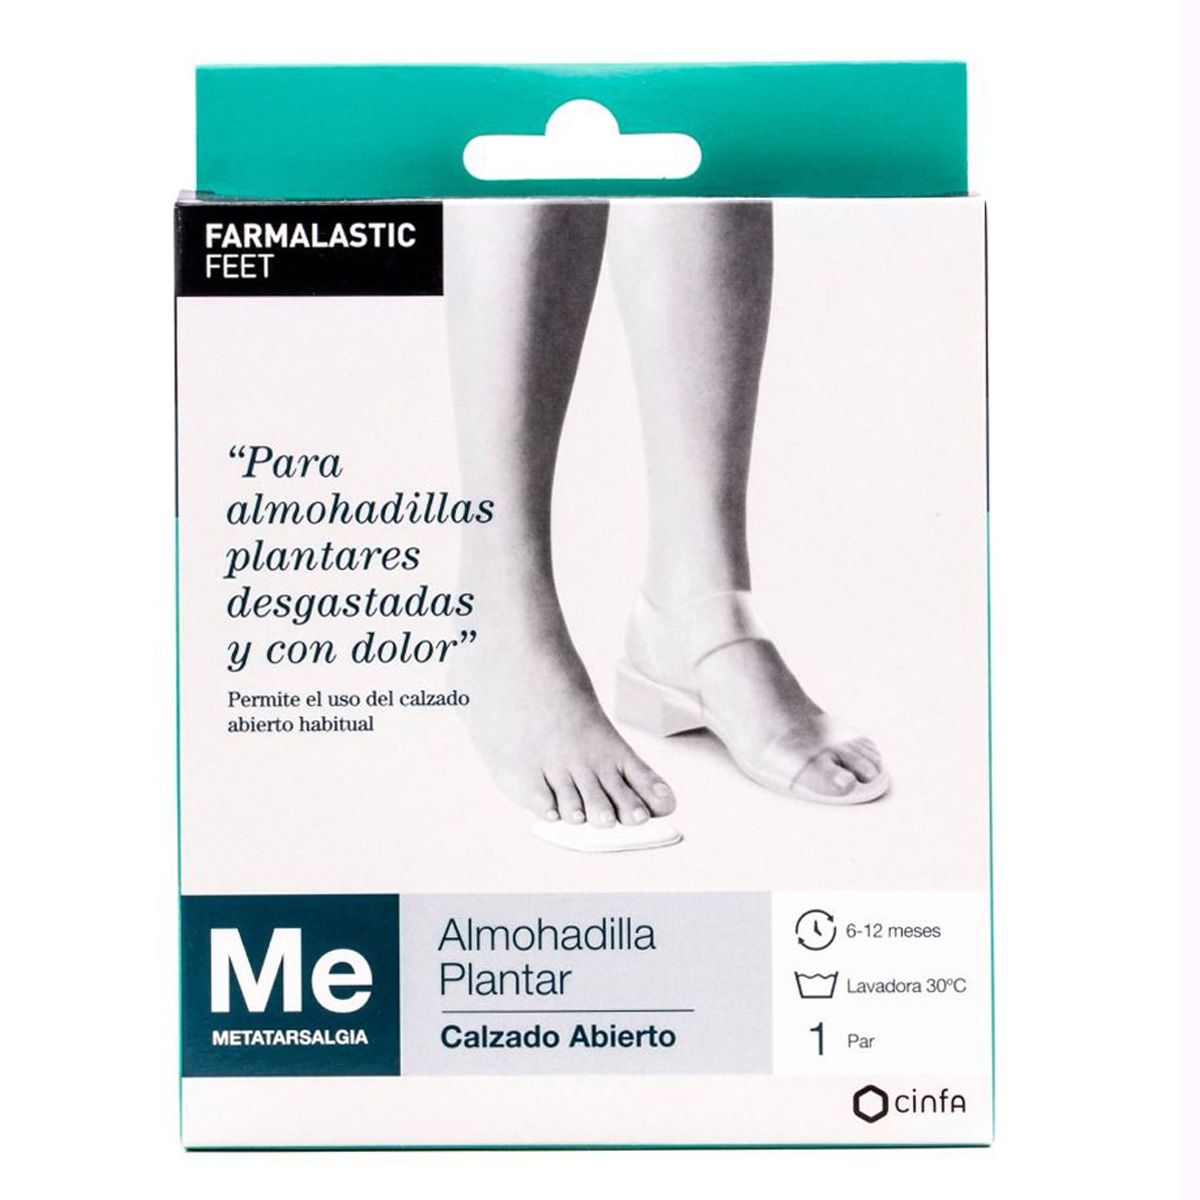 Farmalastic Feet Almohadilla Plantar Calzado Abierto Talla Única 1 Par